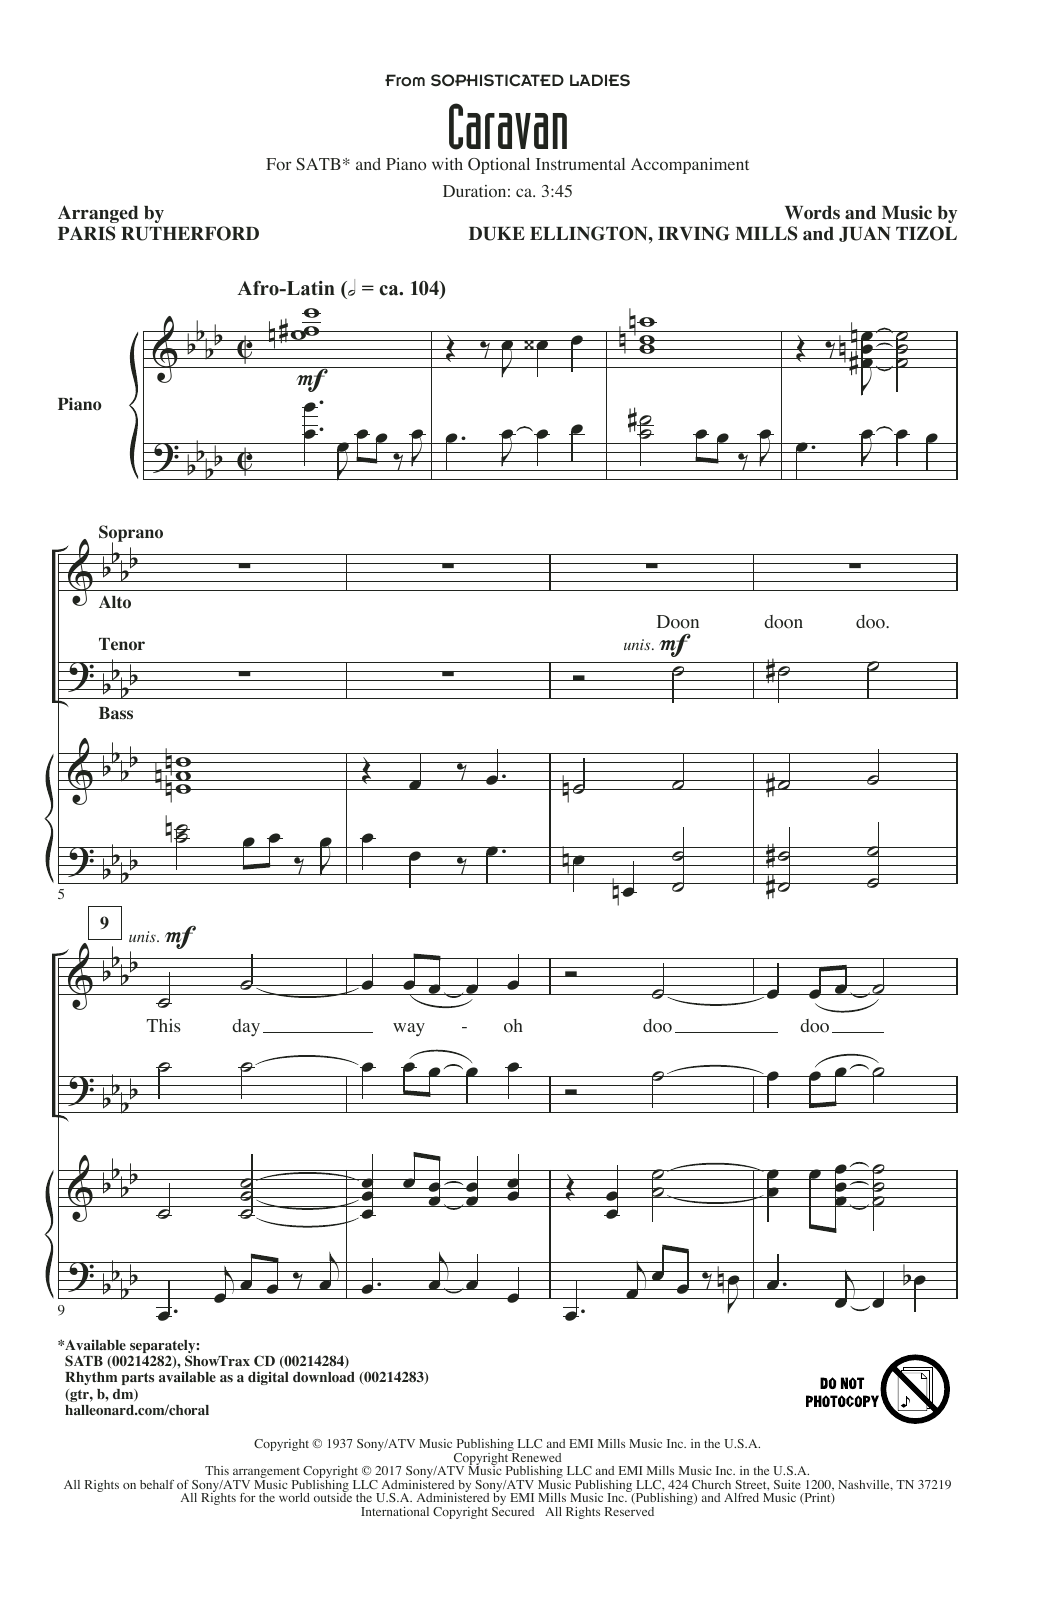 Paris Rutherford Caravan sheet music notes and chords arranged for SATB Choir